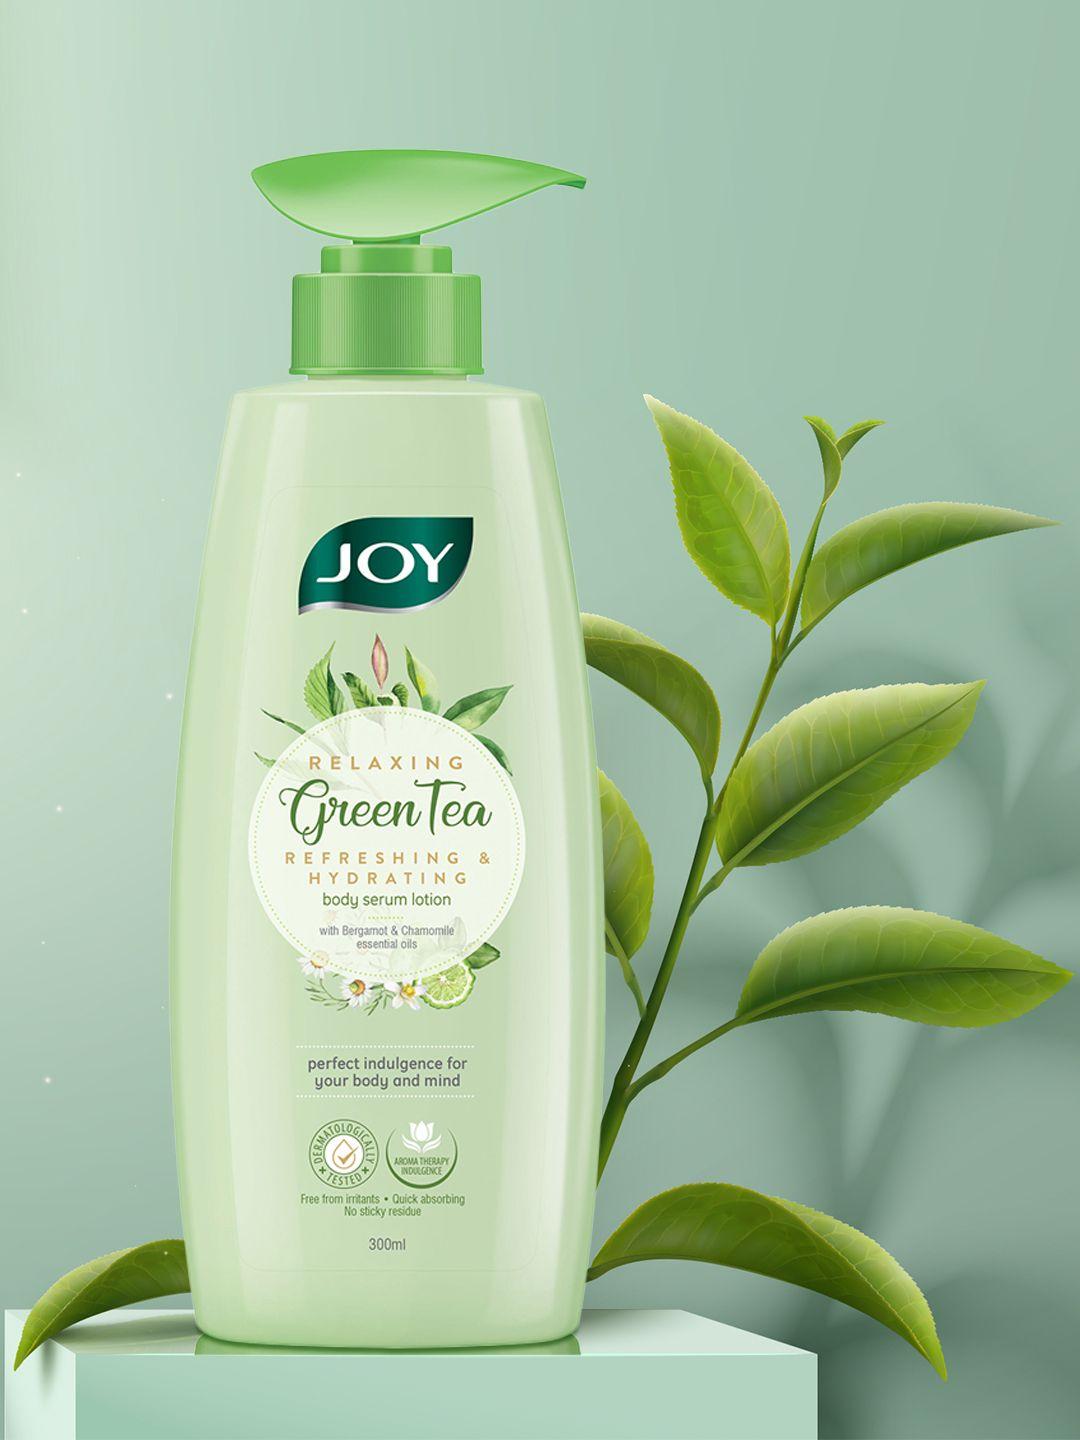 joy relaxing green tea body serum lotion 300 ml